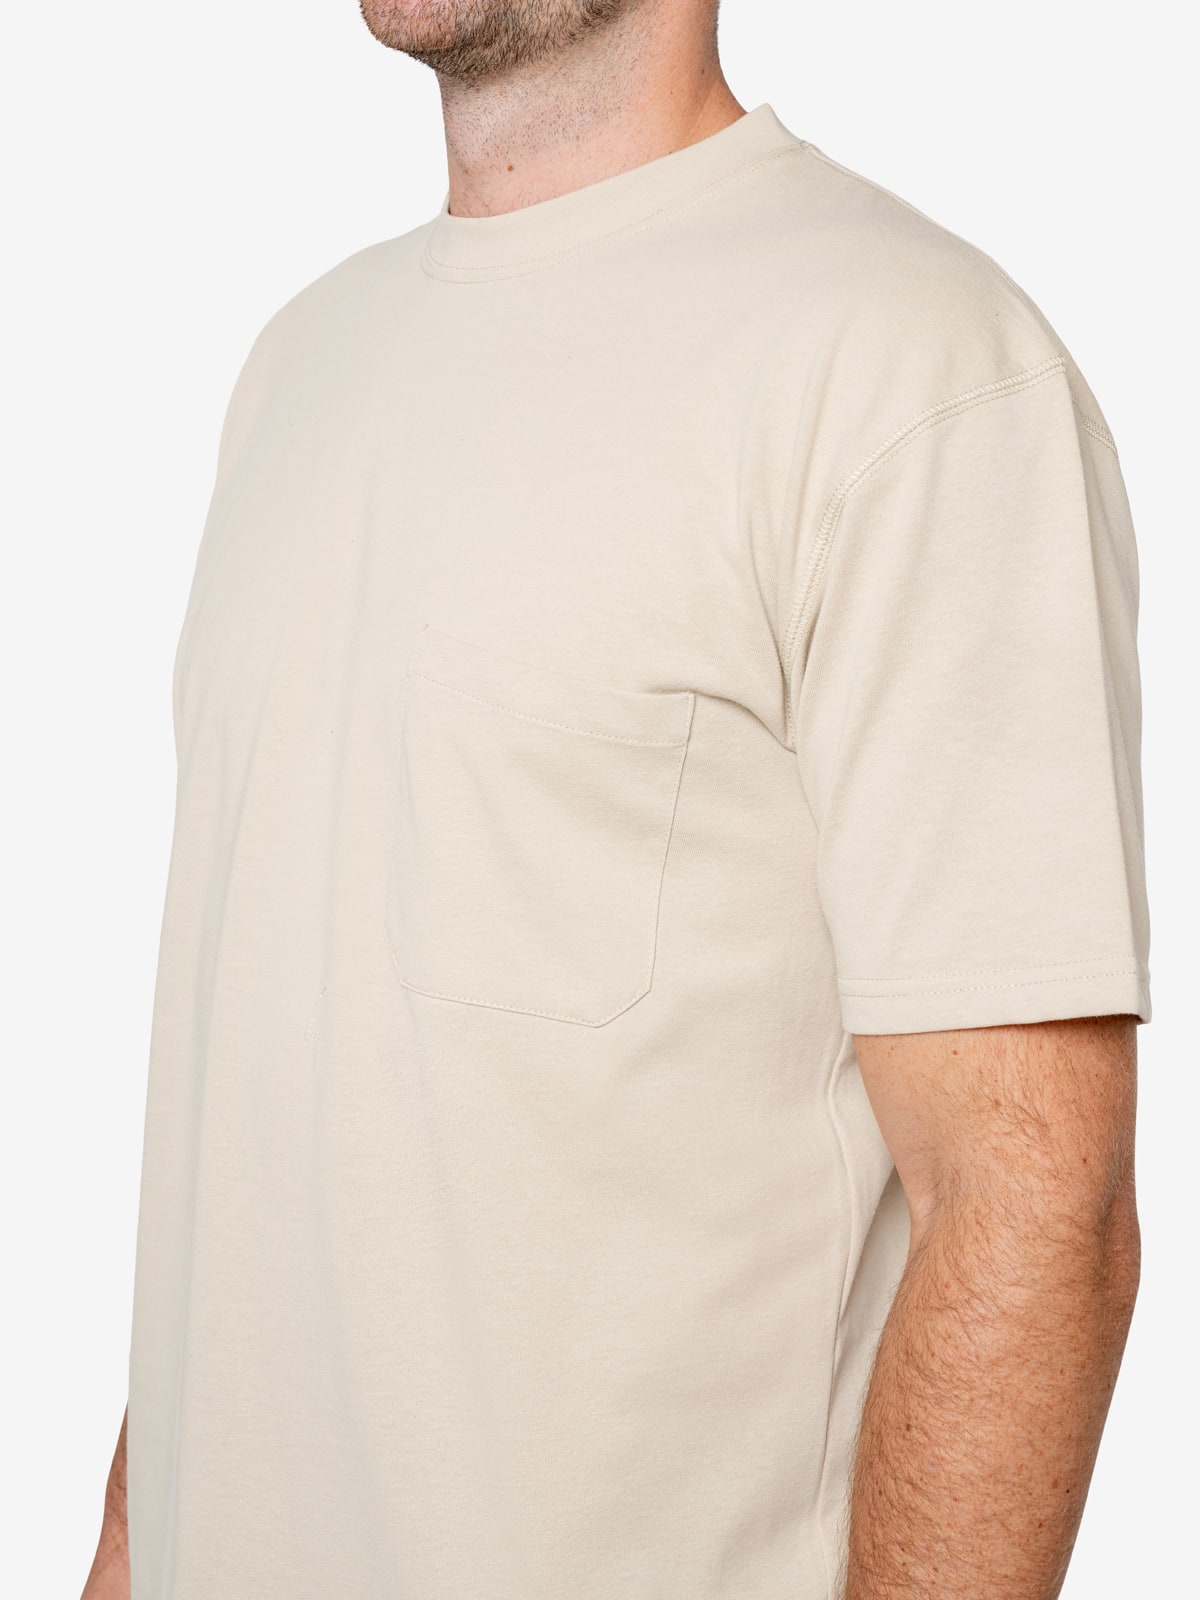 Short-Sleeve White T-Shirt w/ Pocket